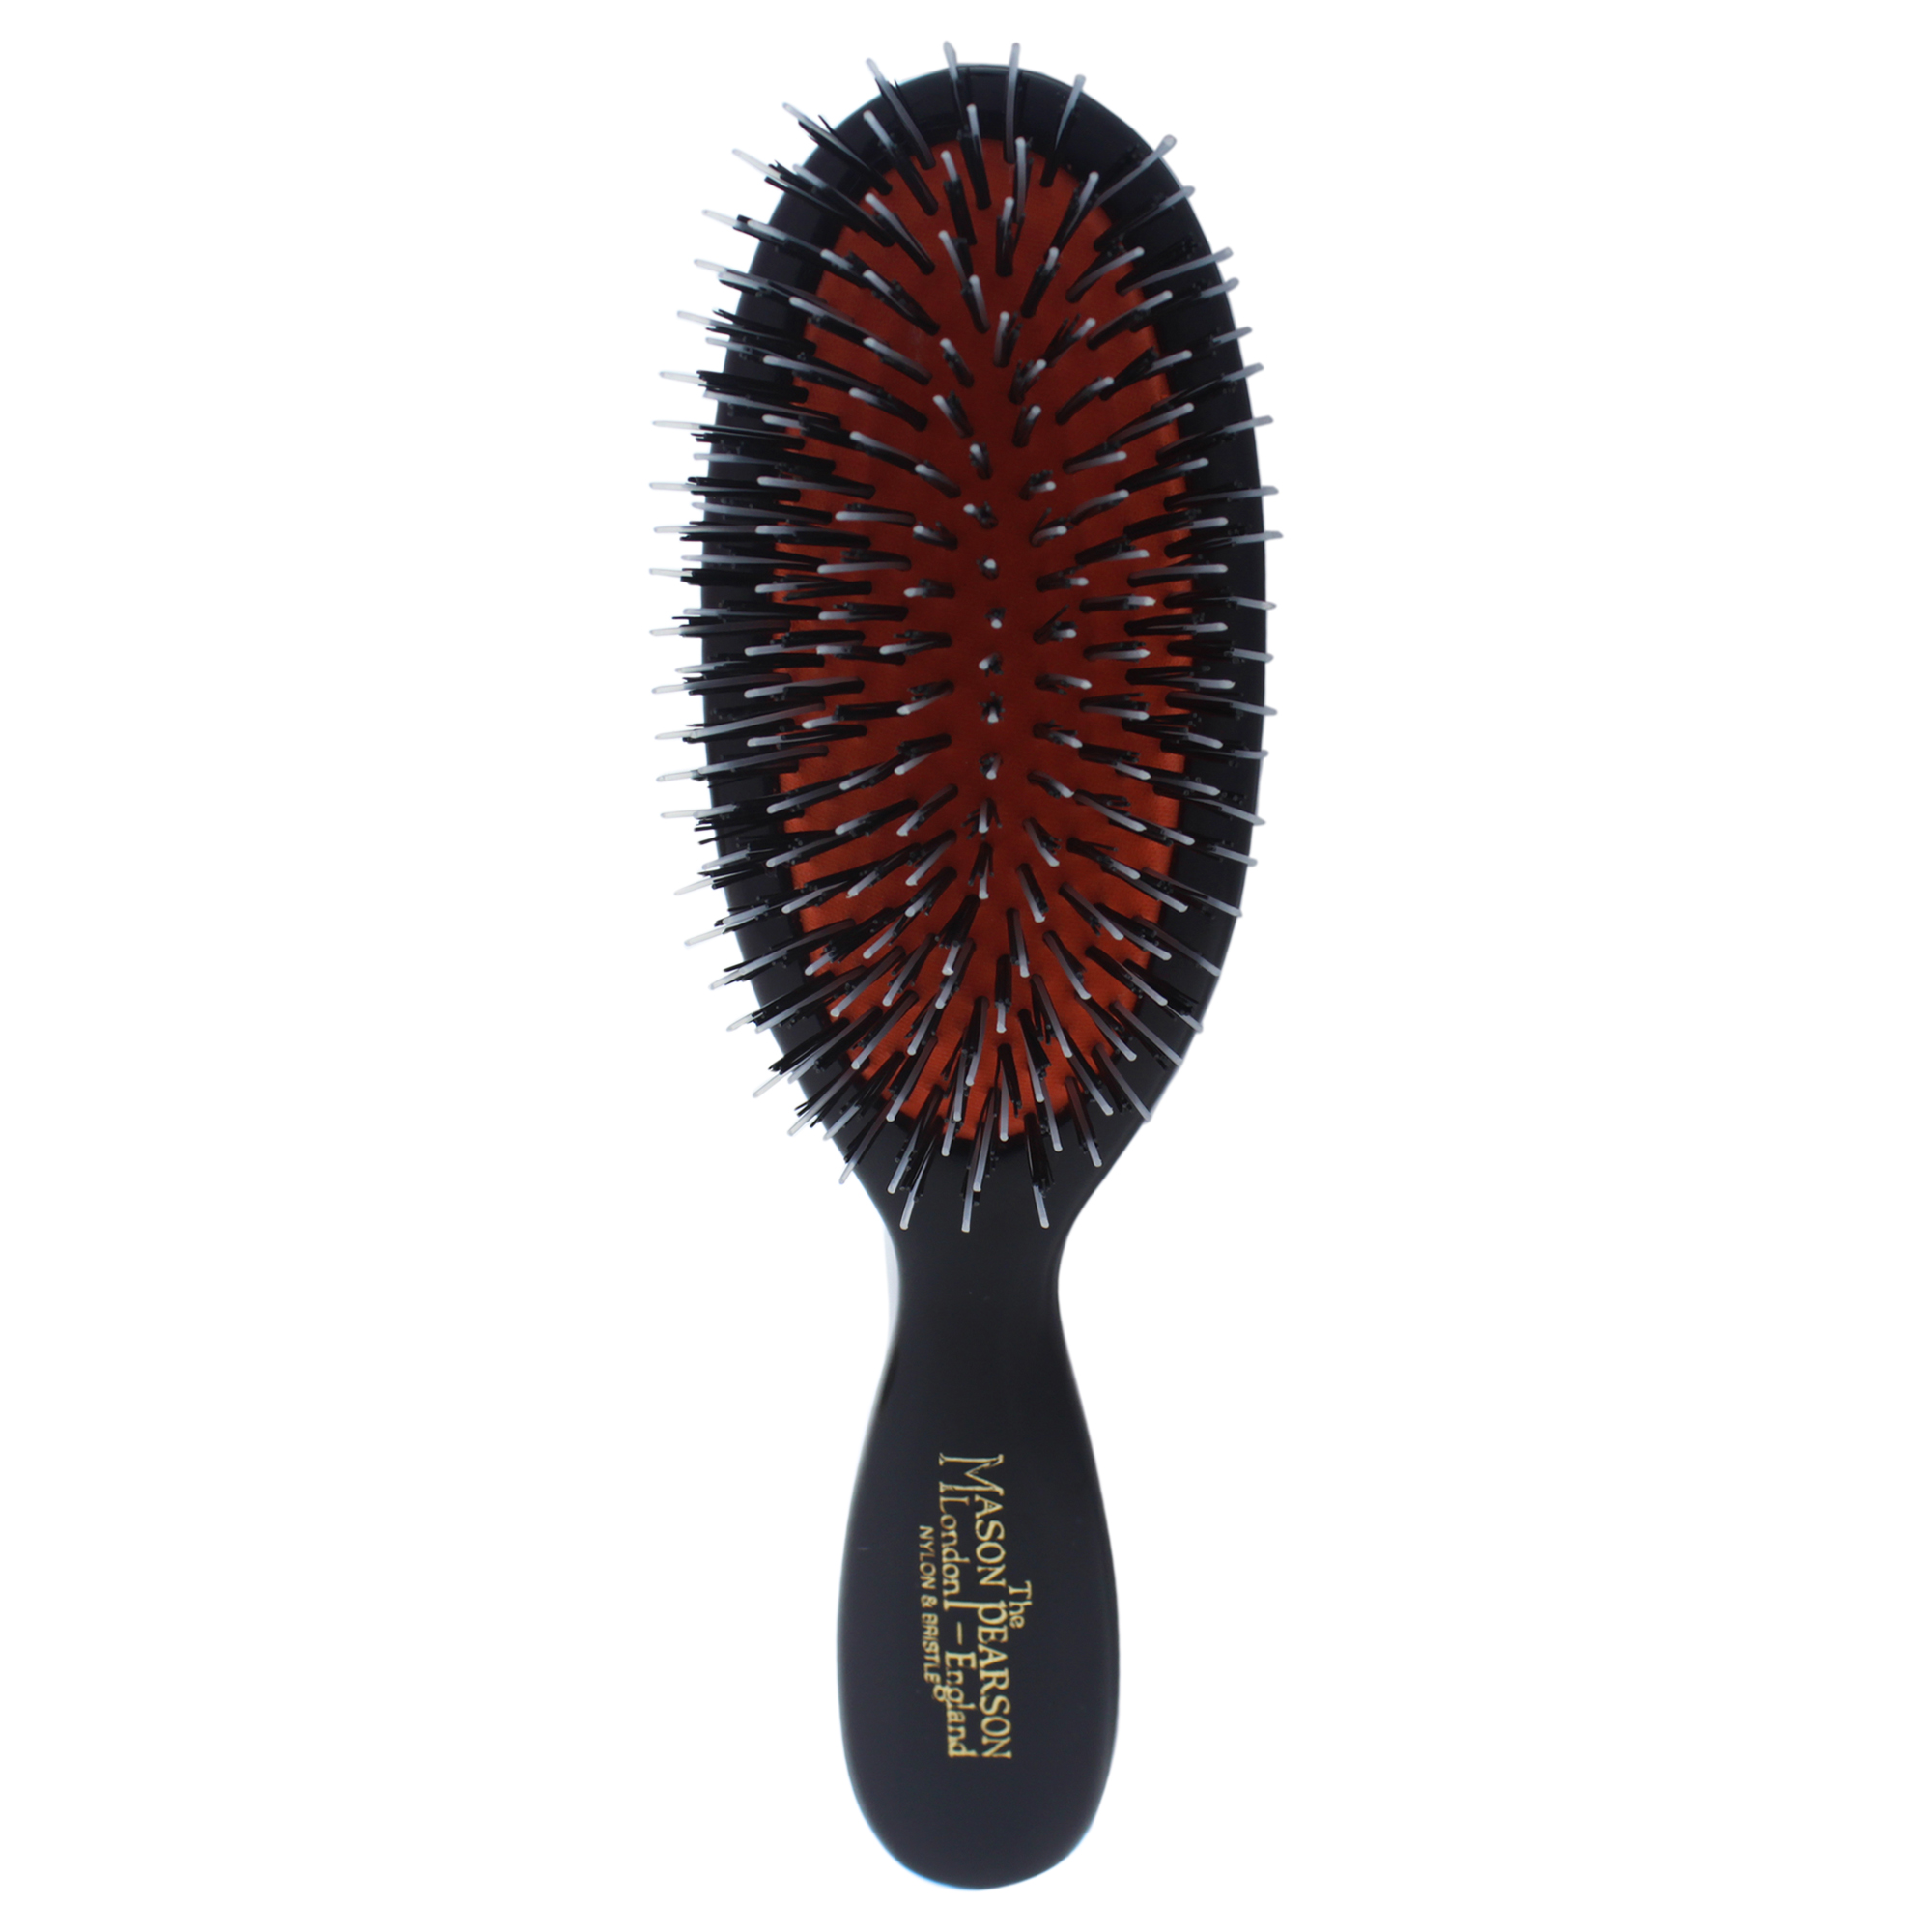 Mason Pearson Hair Brush Pocket Bristle & Nylon Dark Ruby BN4 - image 4 of 7